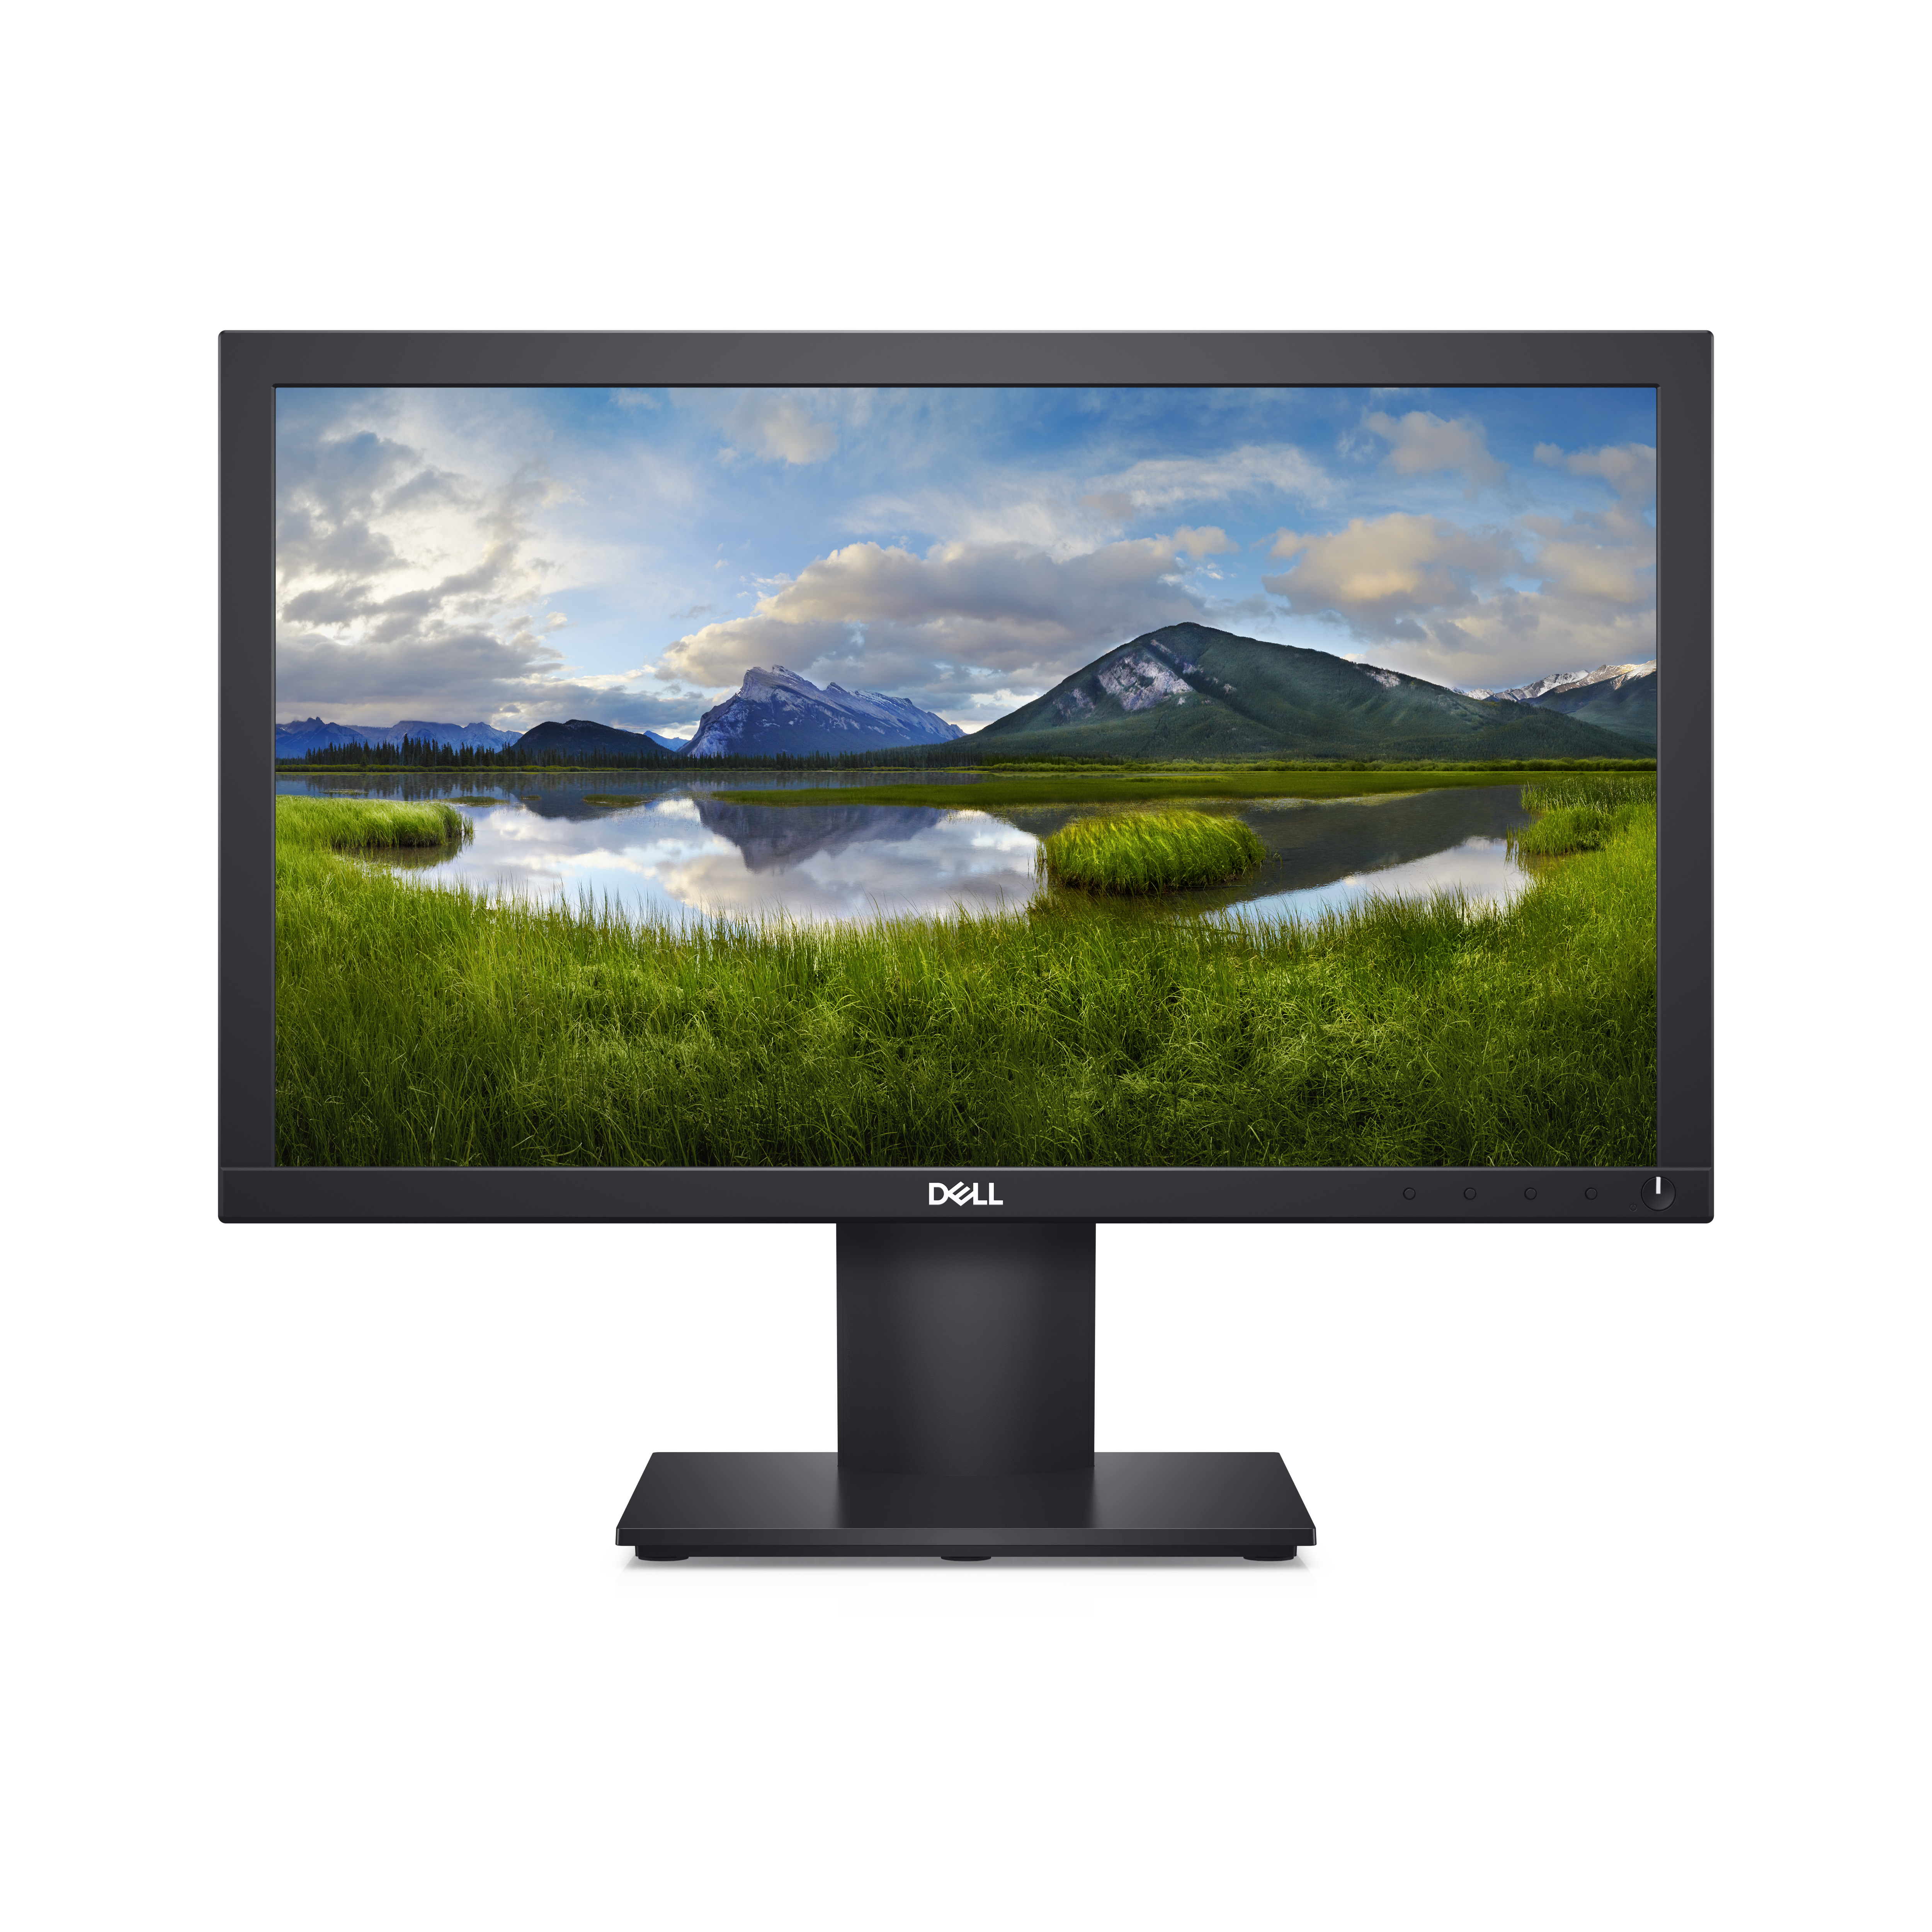 Monitor Dell 19" E1920H Hd Led Vga Displayport 3 Años Garanti 210-Aund